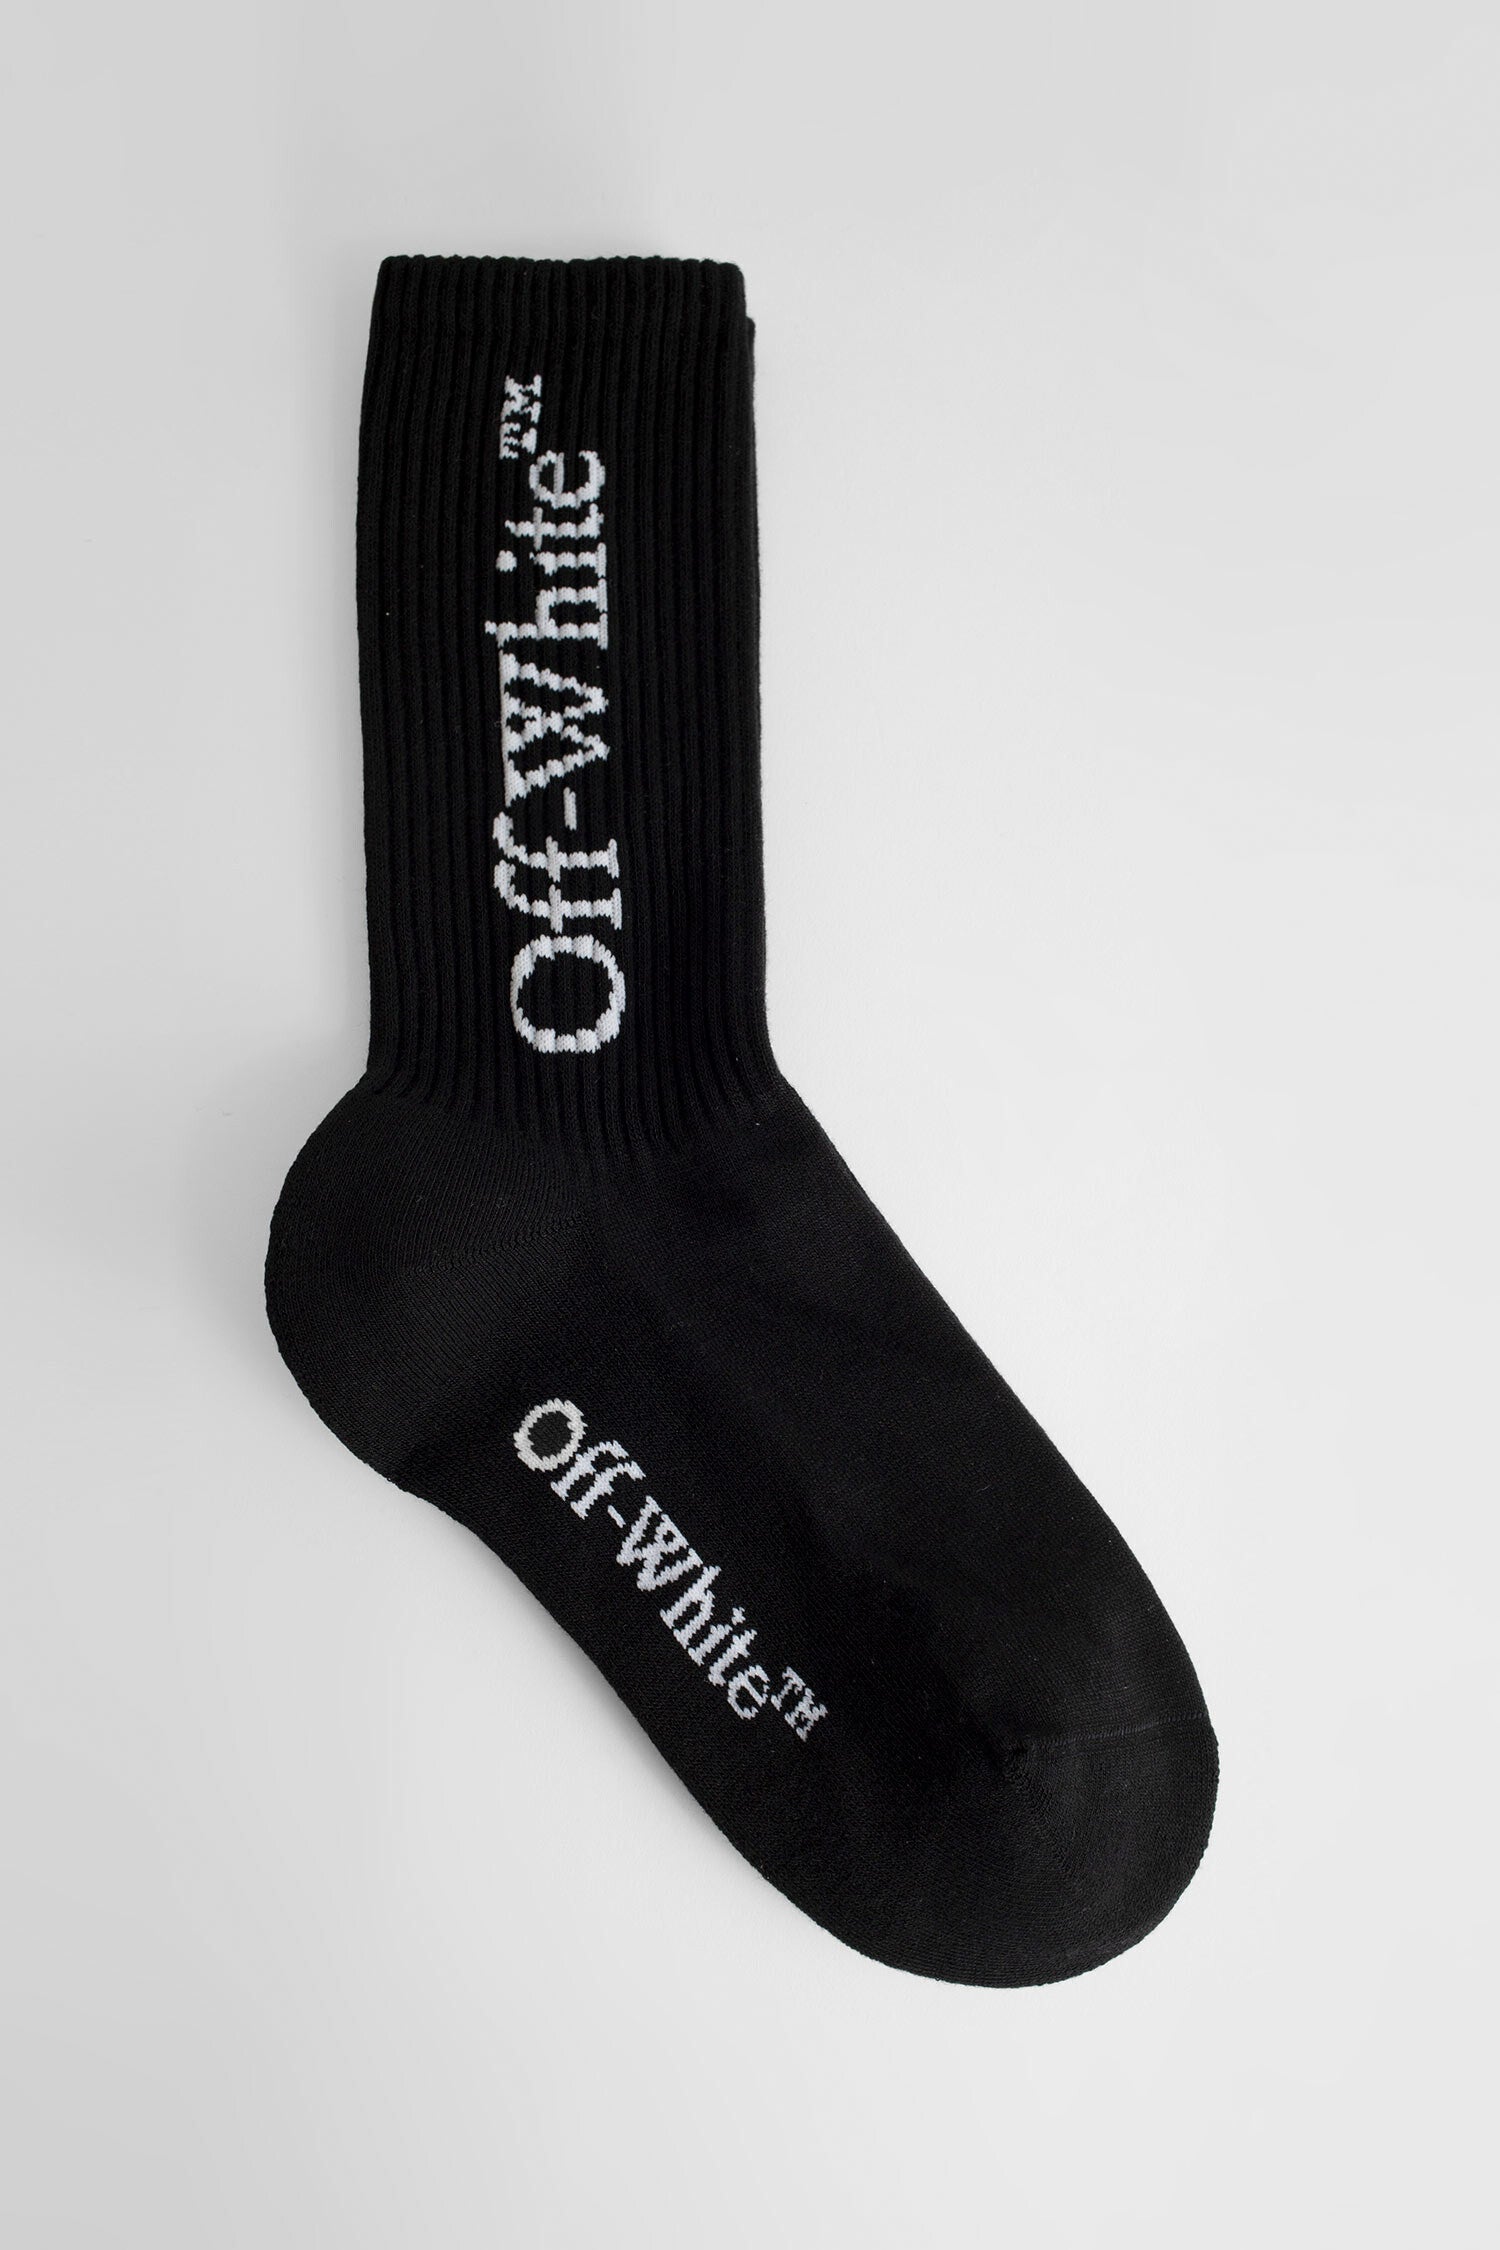 OFF-WHITE Arrow Bookish Socks Black/White